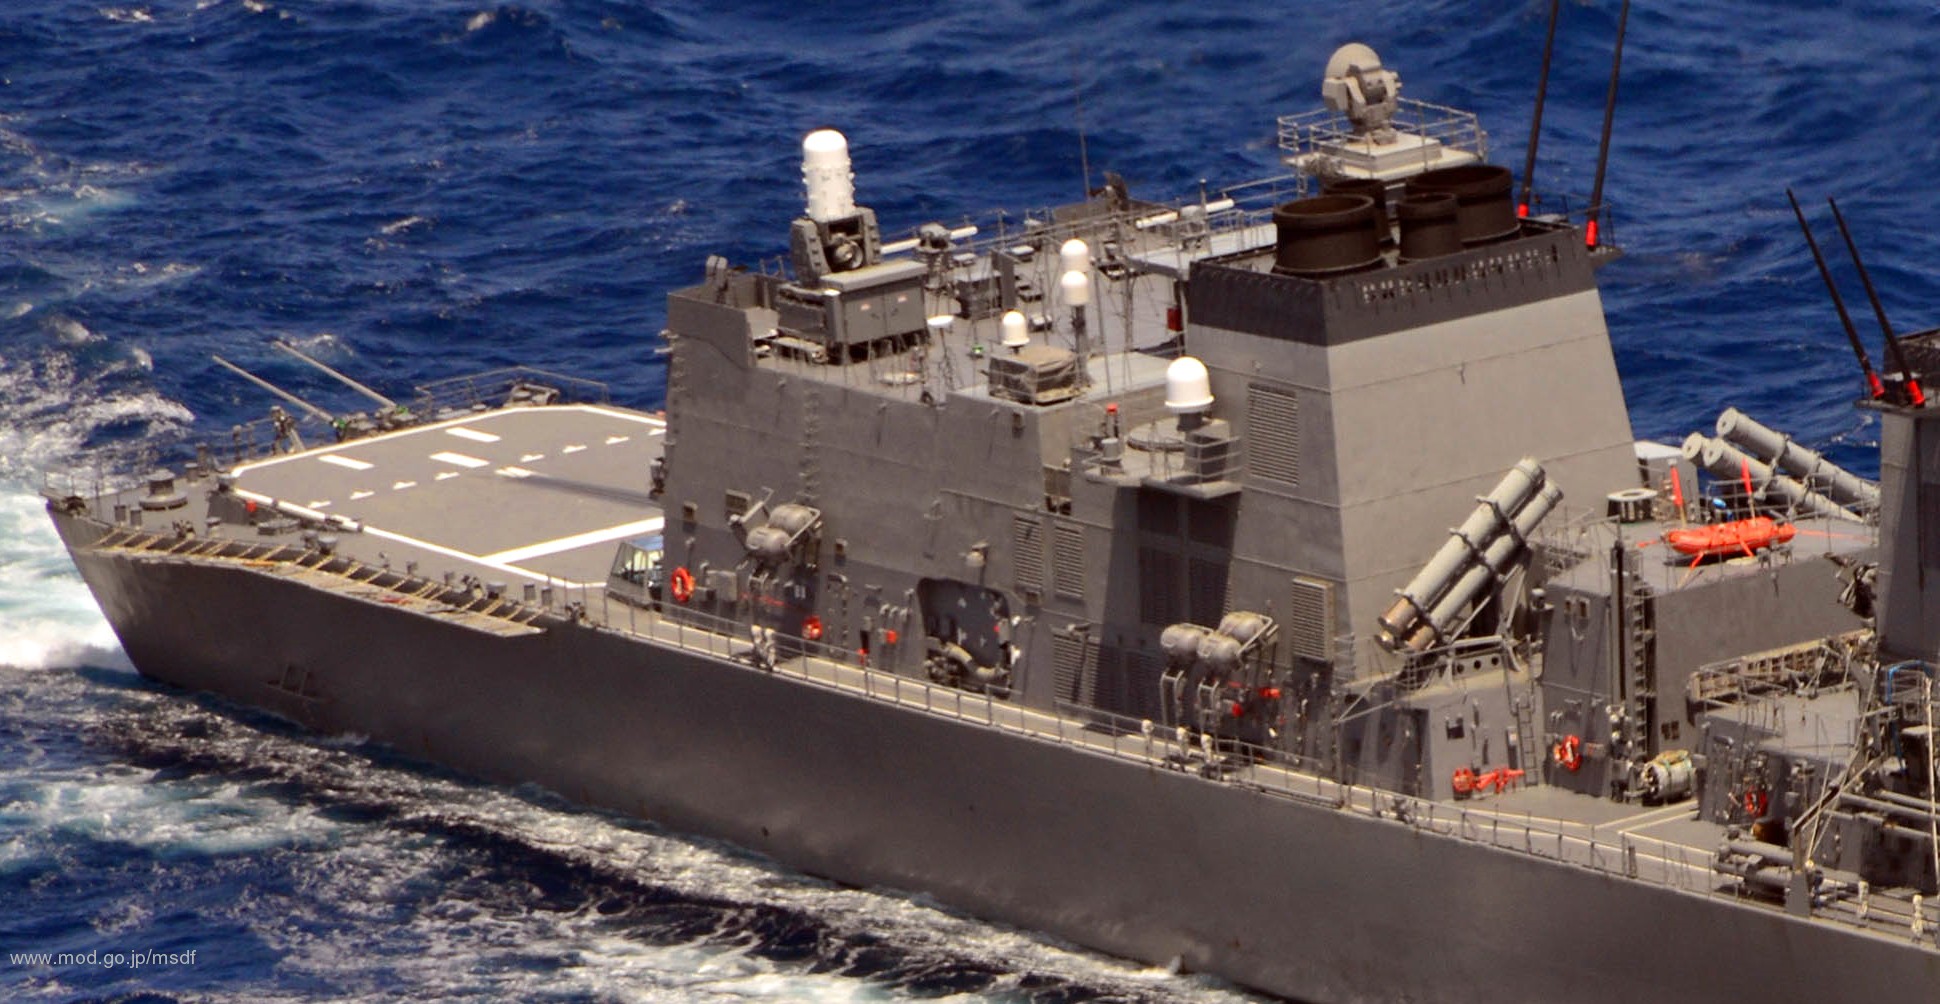 takanami class destroyer japan maritime self defense force jmsdf superstructure armament details 06